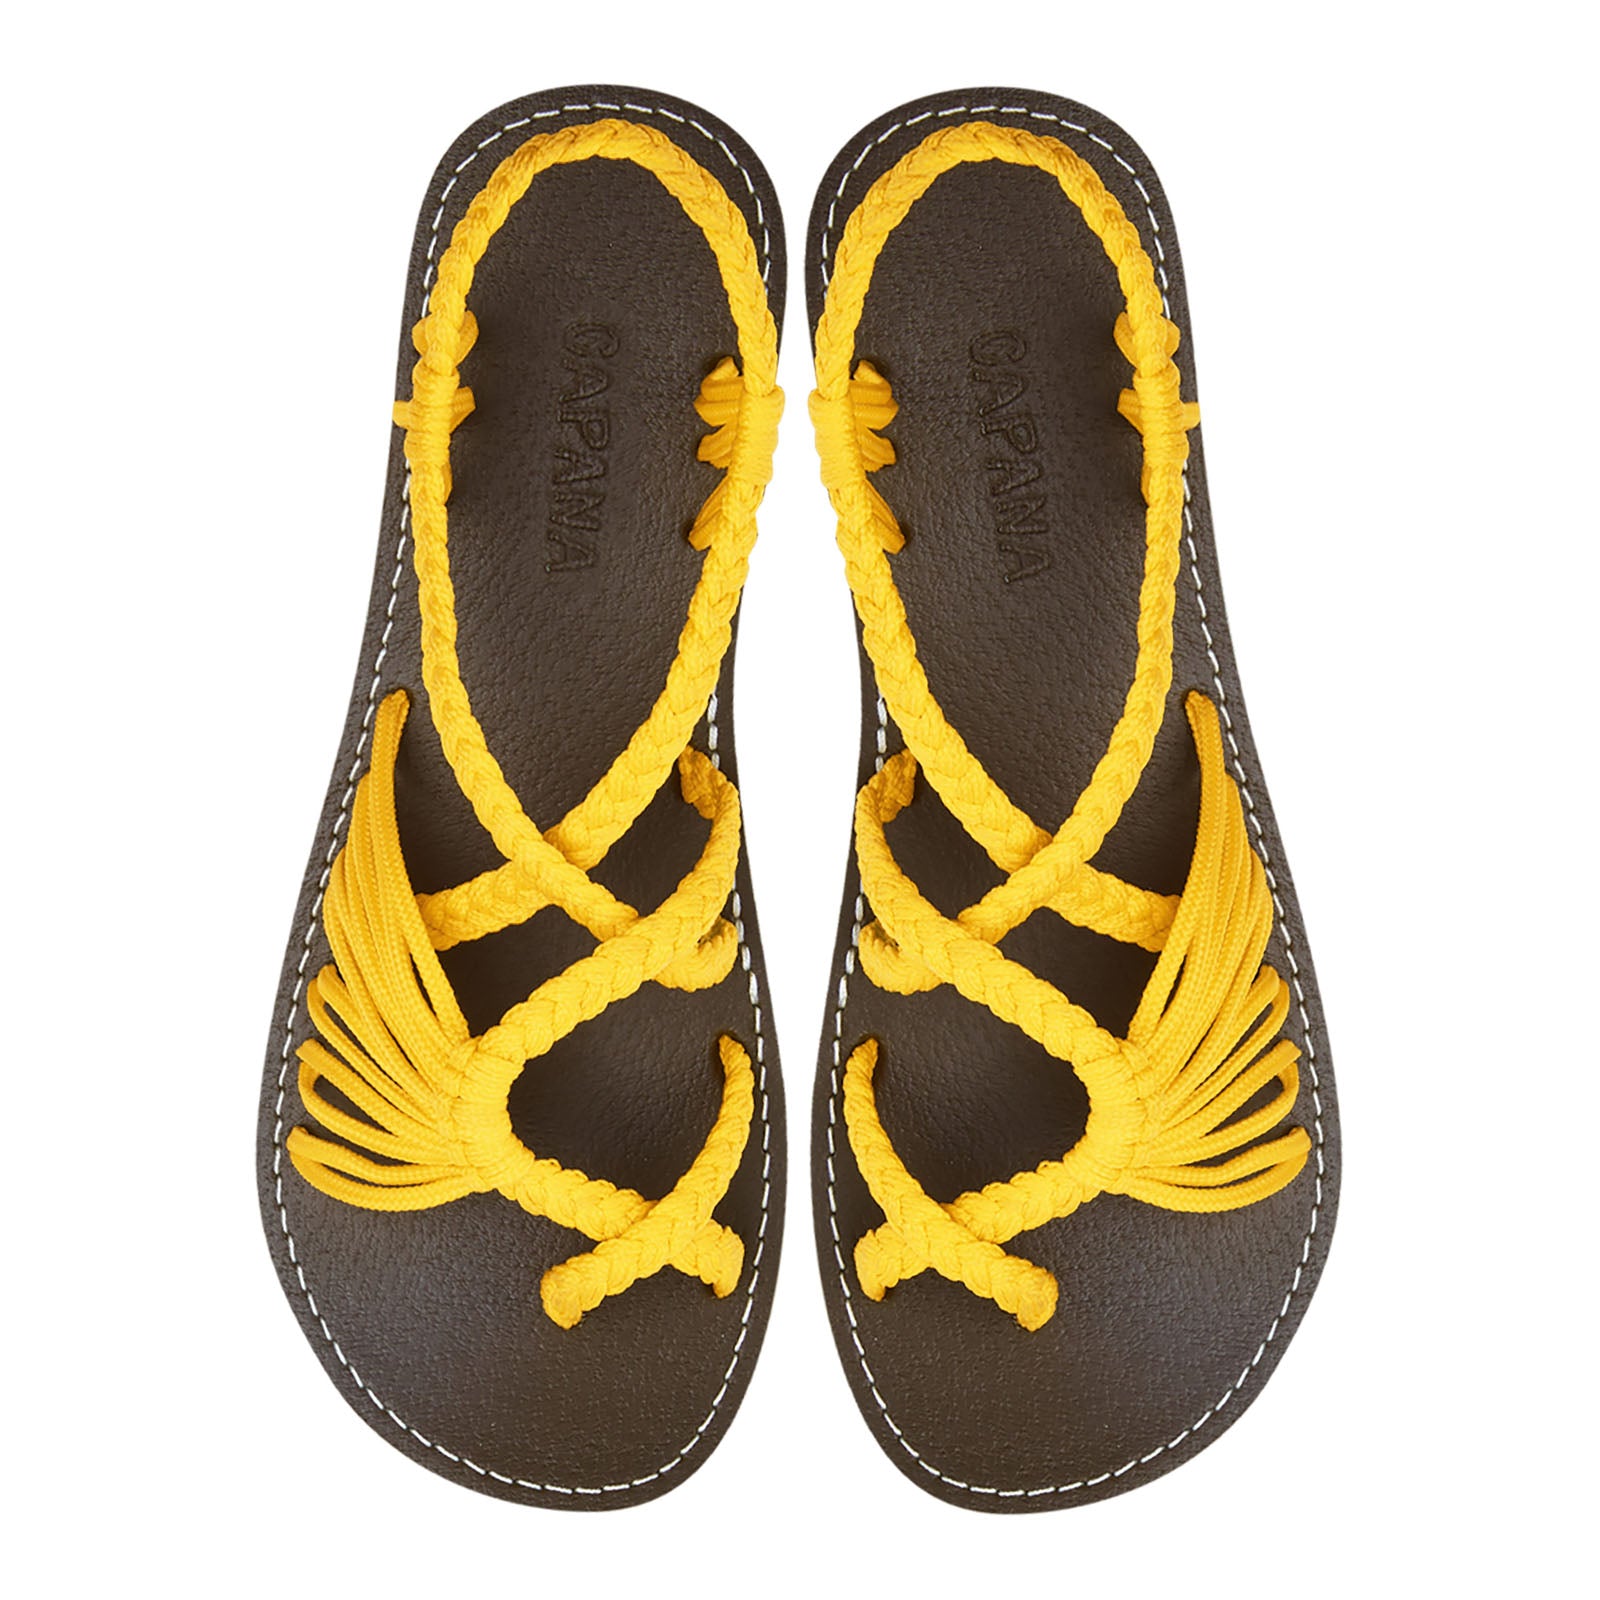 Handwoven Women's Flat Sandals Marigold - Strappy Sandals for Women, Boho Sandals, Walking Sandals Women, Rope Sandals, Beach Sandals for Women, Water Sandals, Braided Flat Sandals for Women